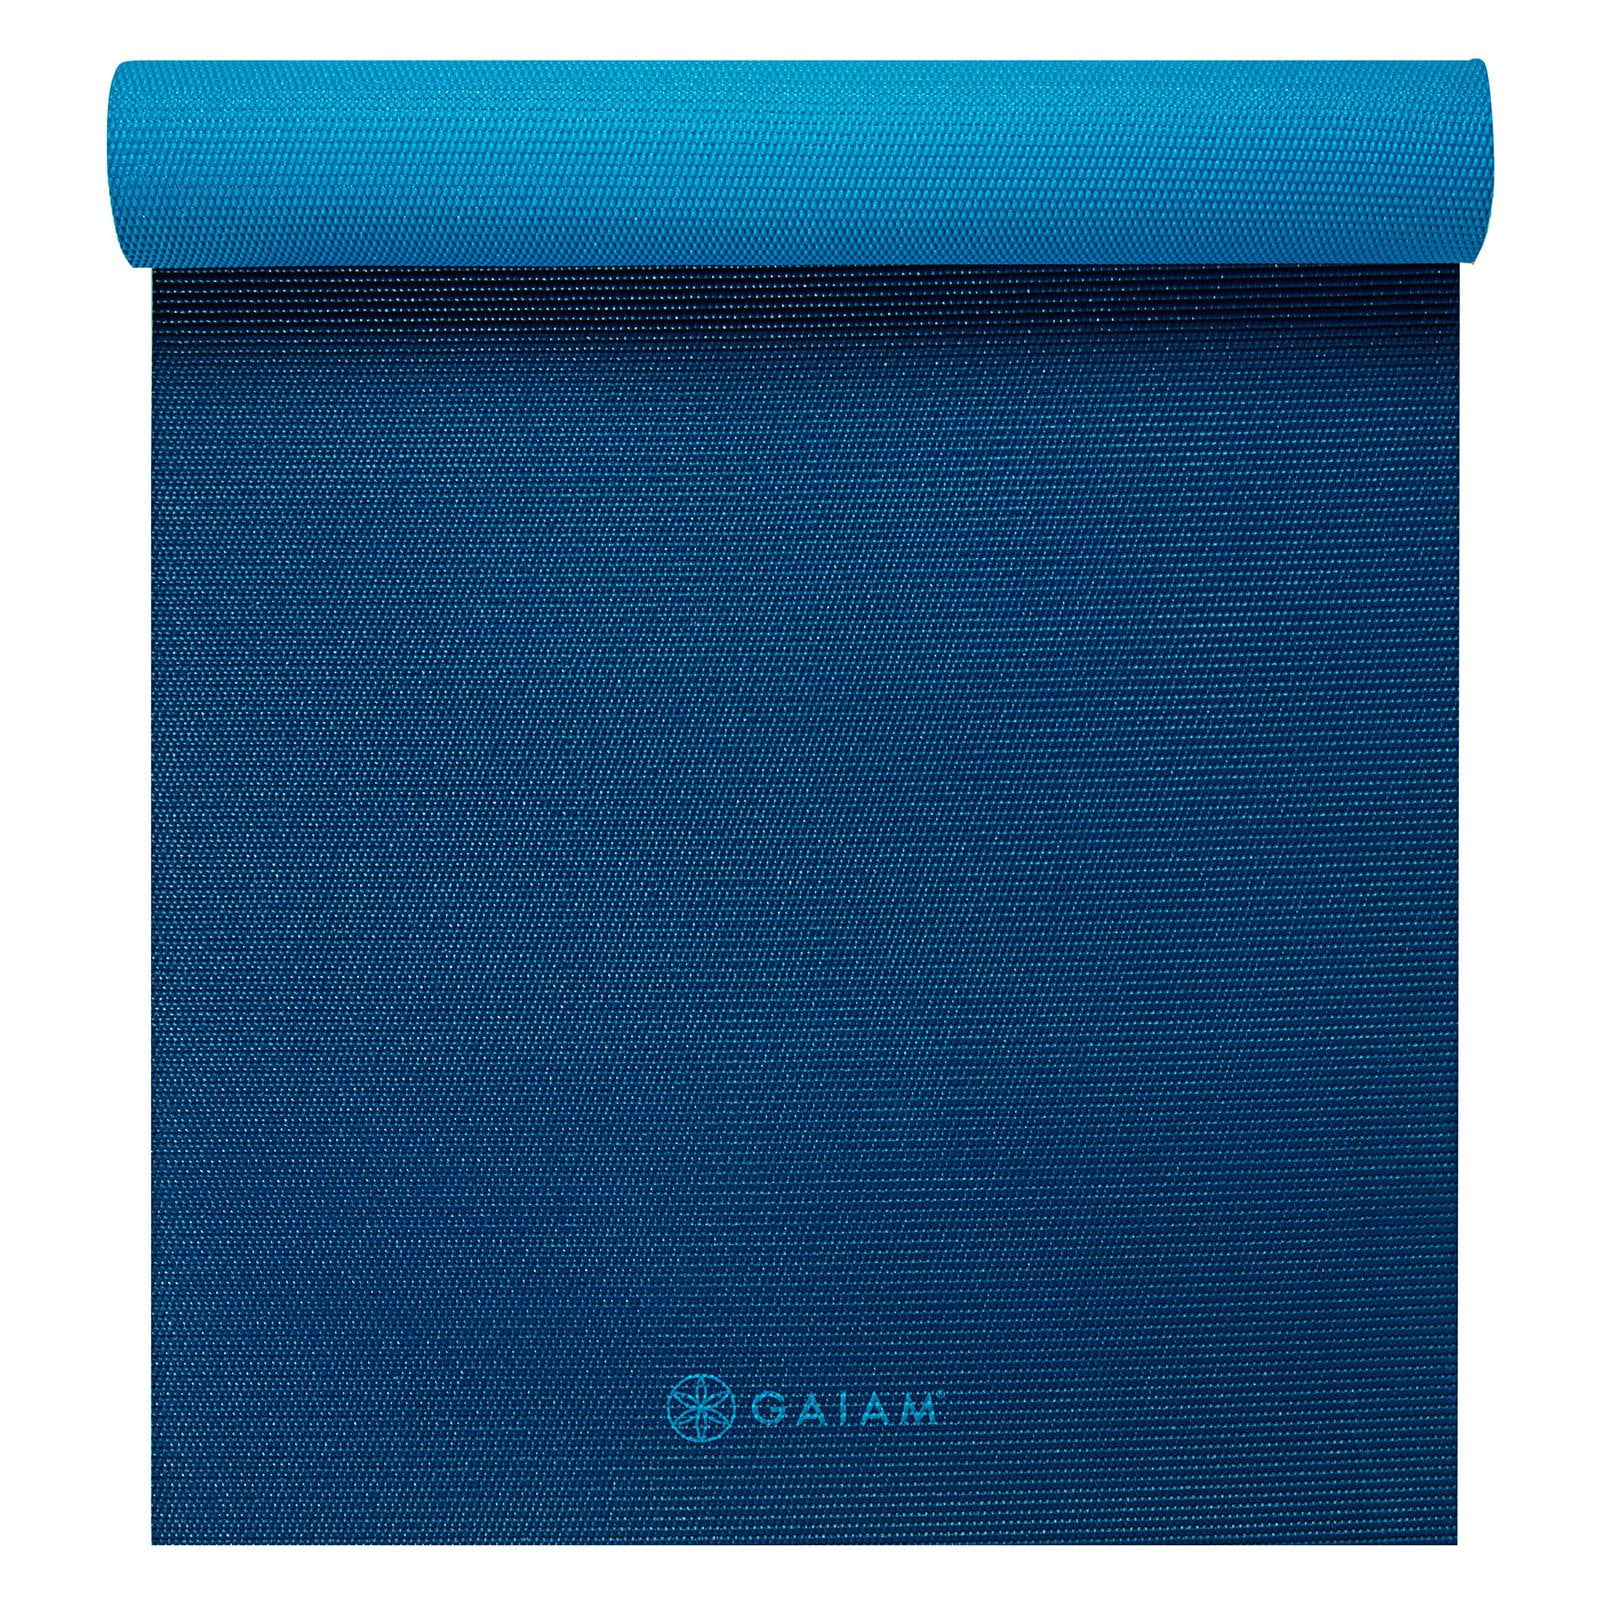 Gaiam Classic Print Yoga Mat, Vivid Zest, 4mm